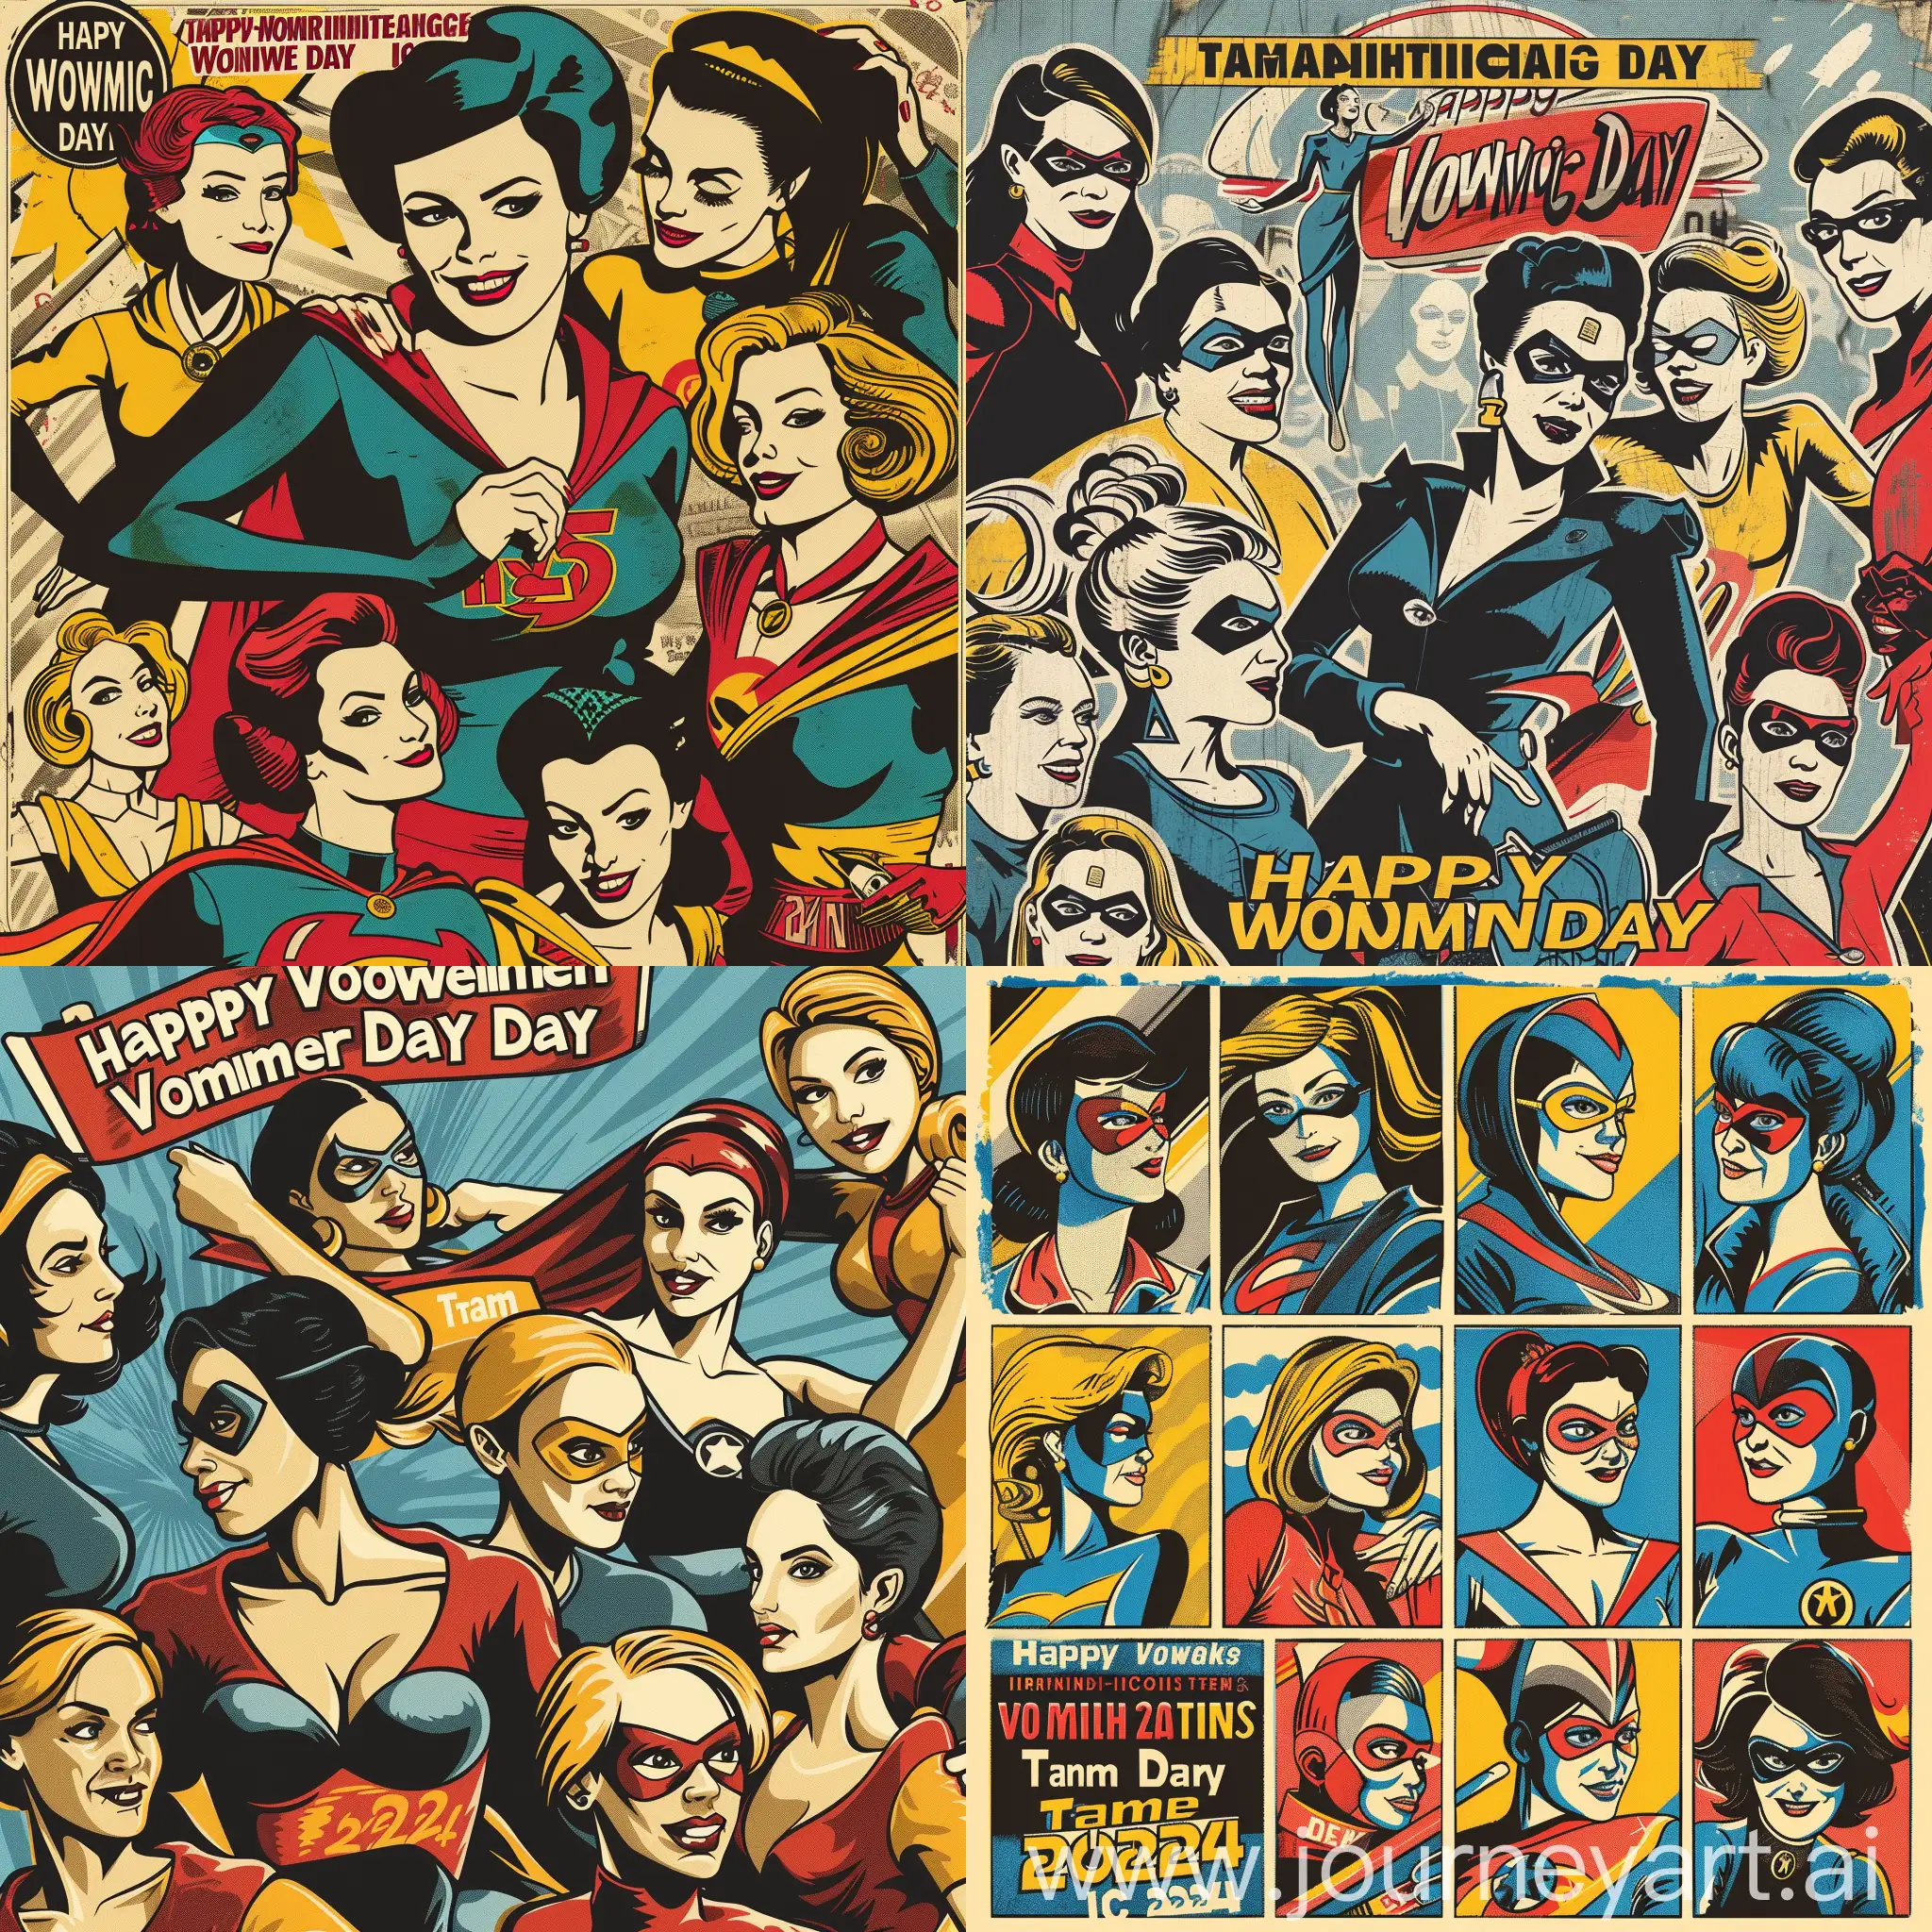 Dynamic-1950sInspired-Superheroic-Women-Celebrate-International-Womens-Day